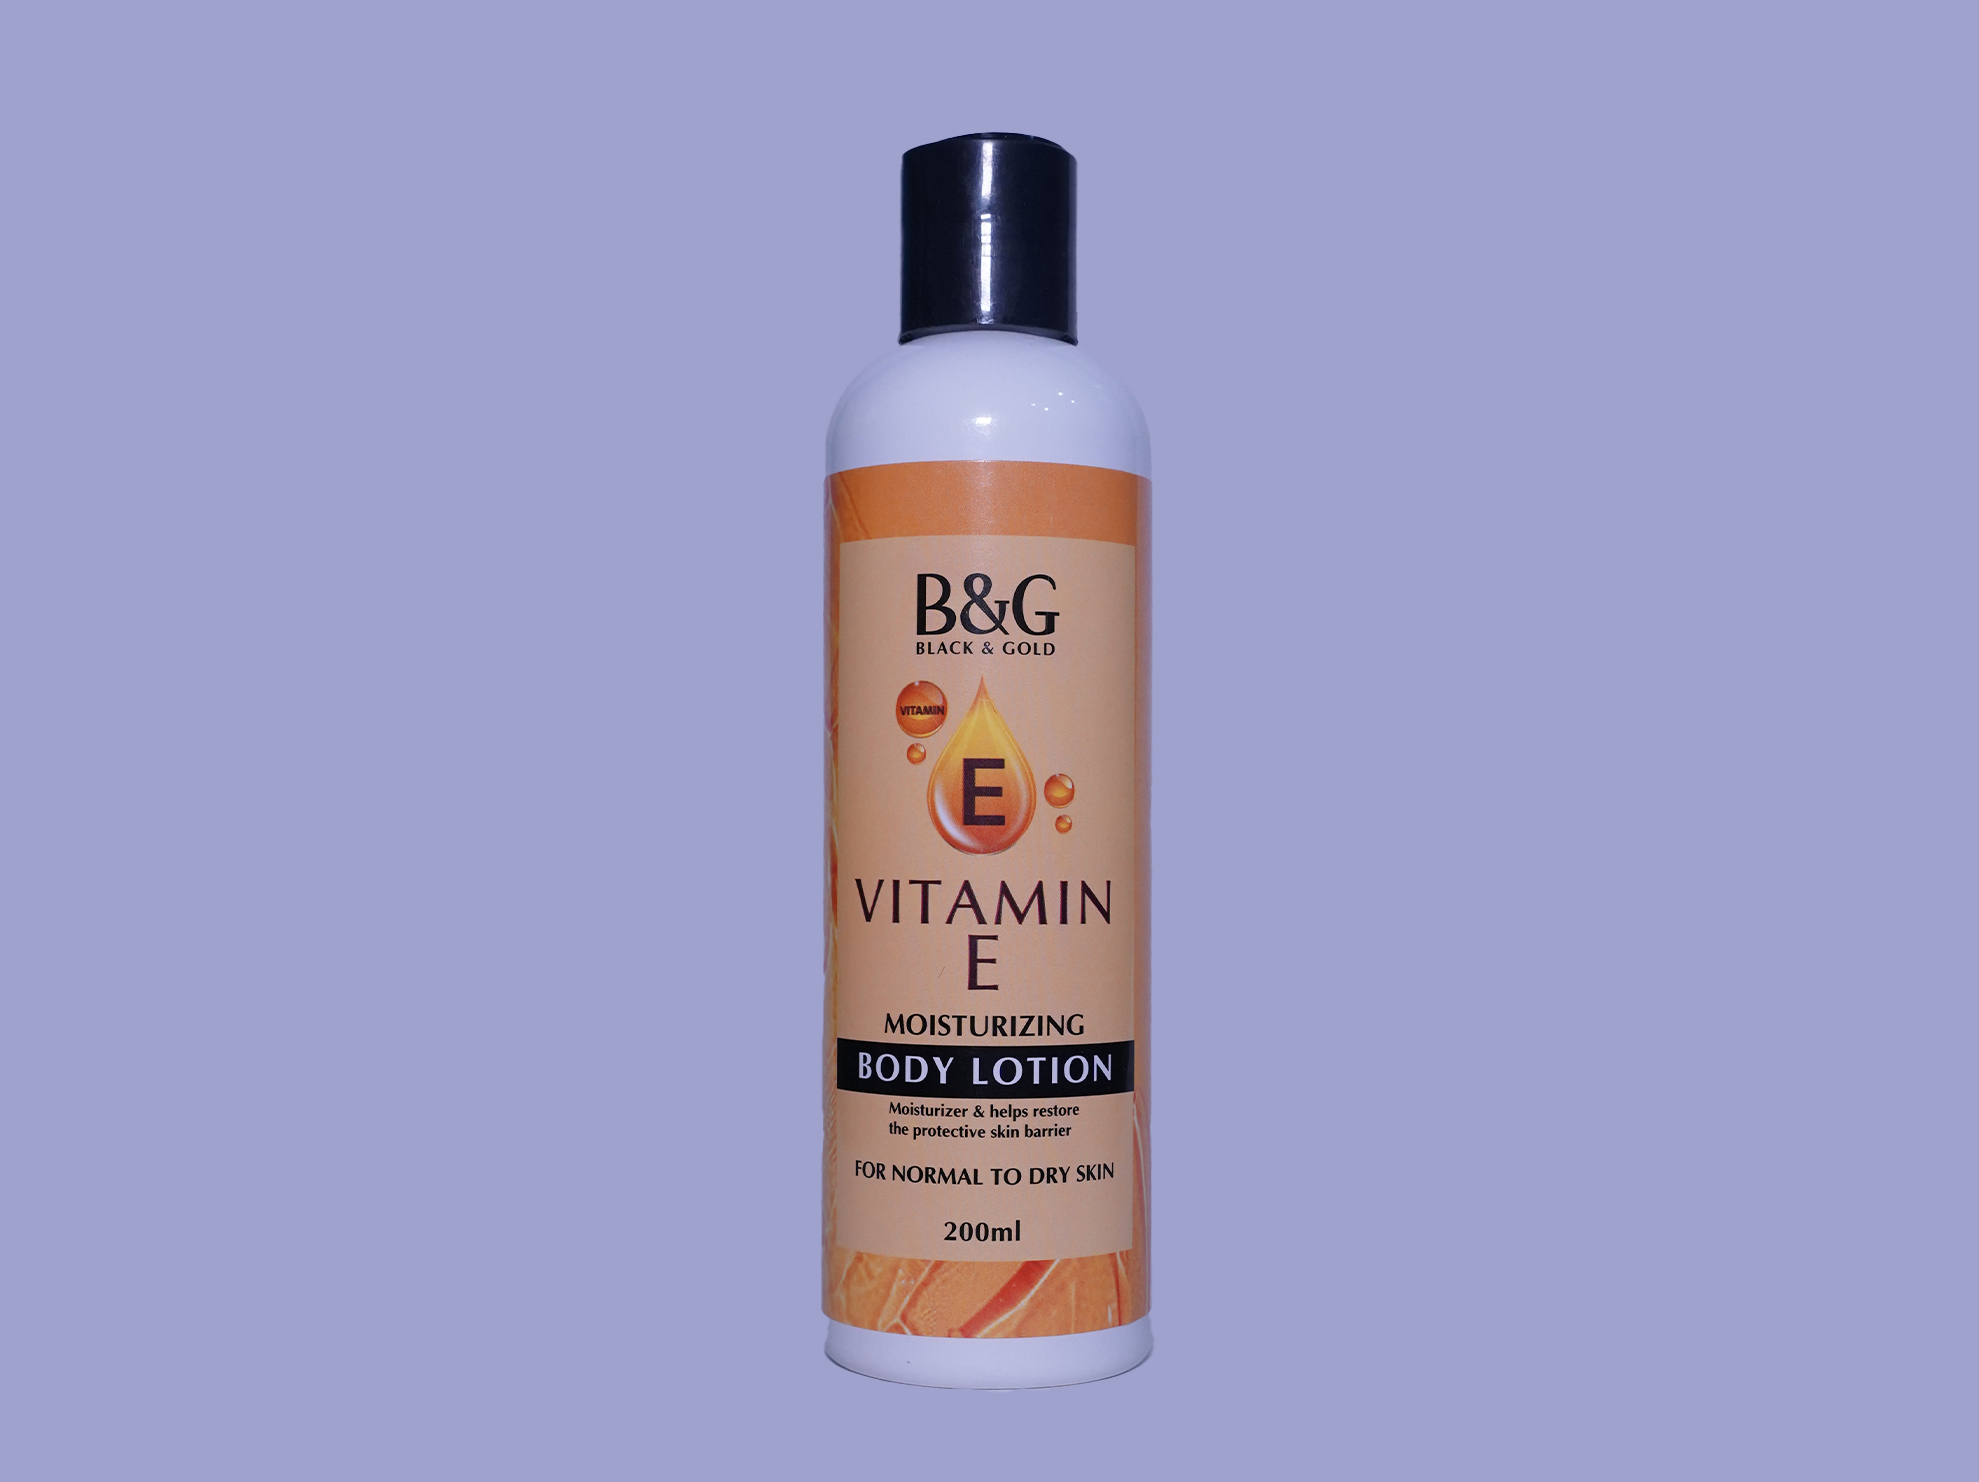 B&G Vitamin E Moisturizing Body Lotion